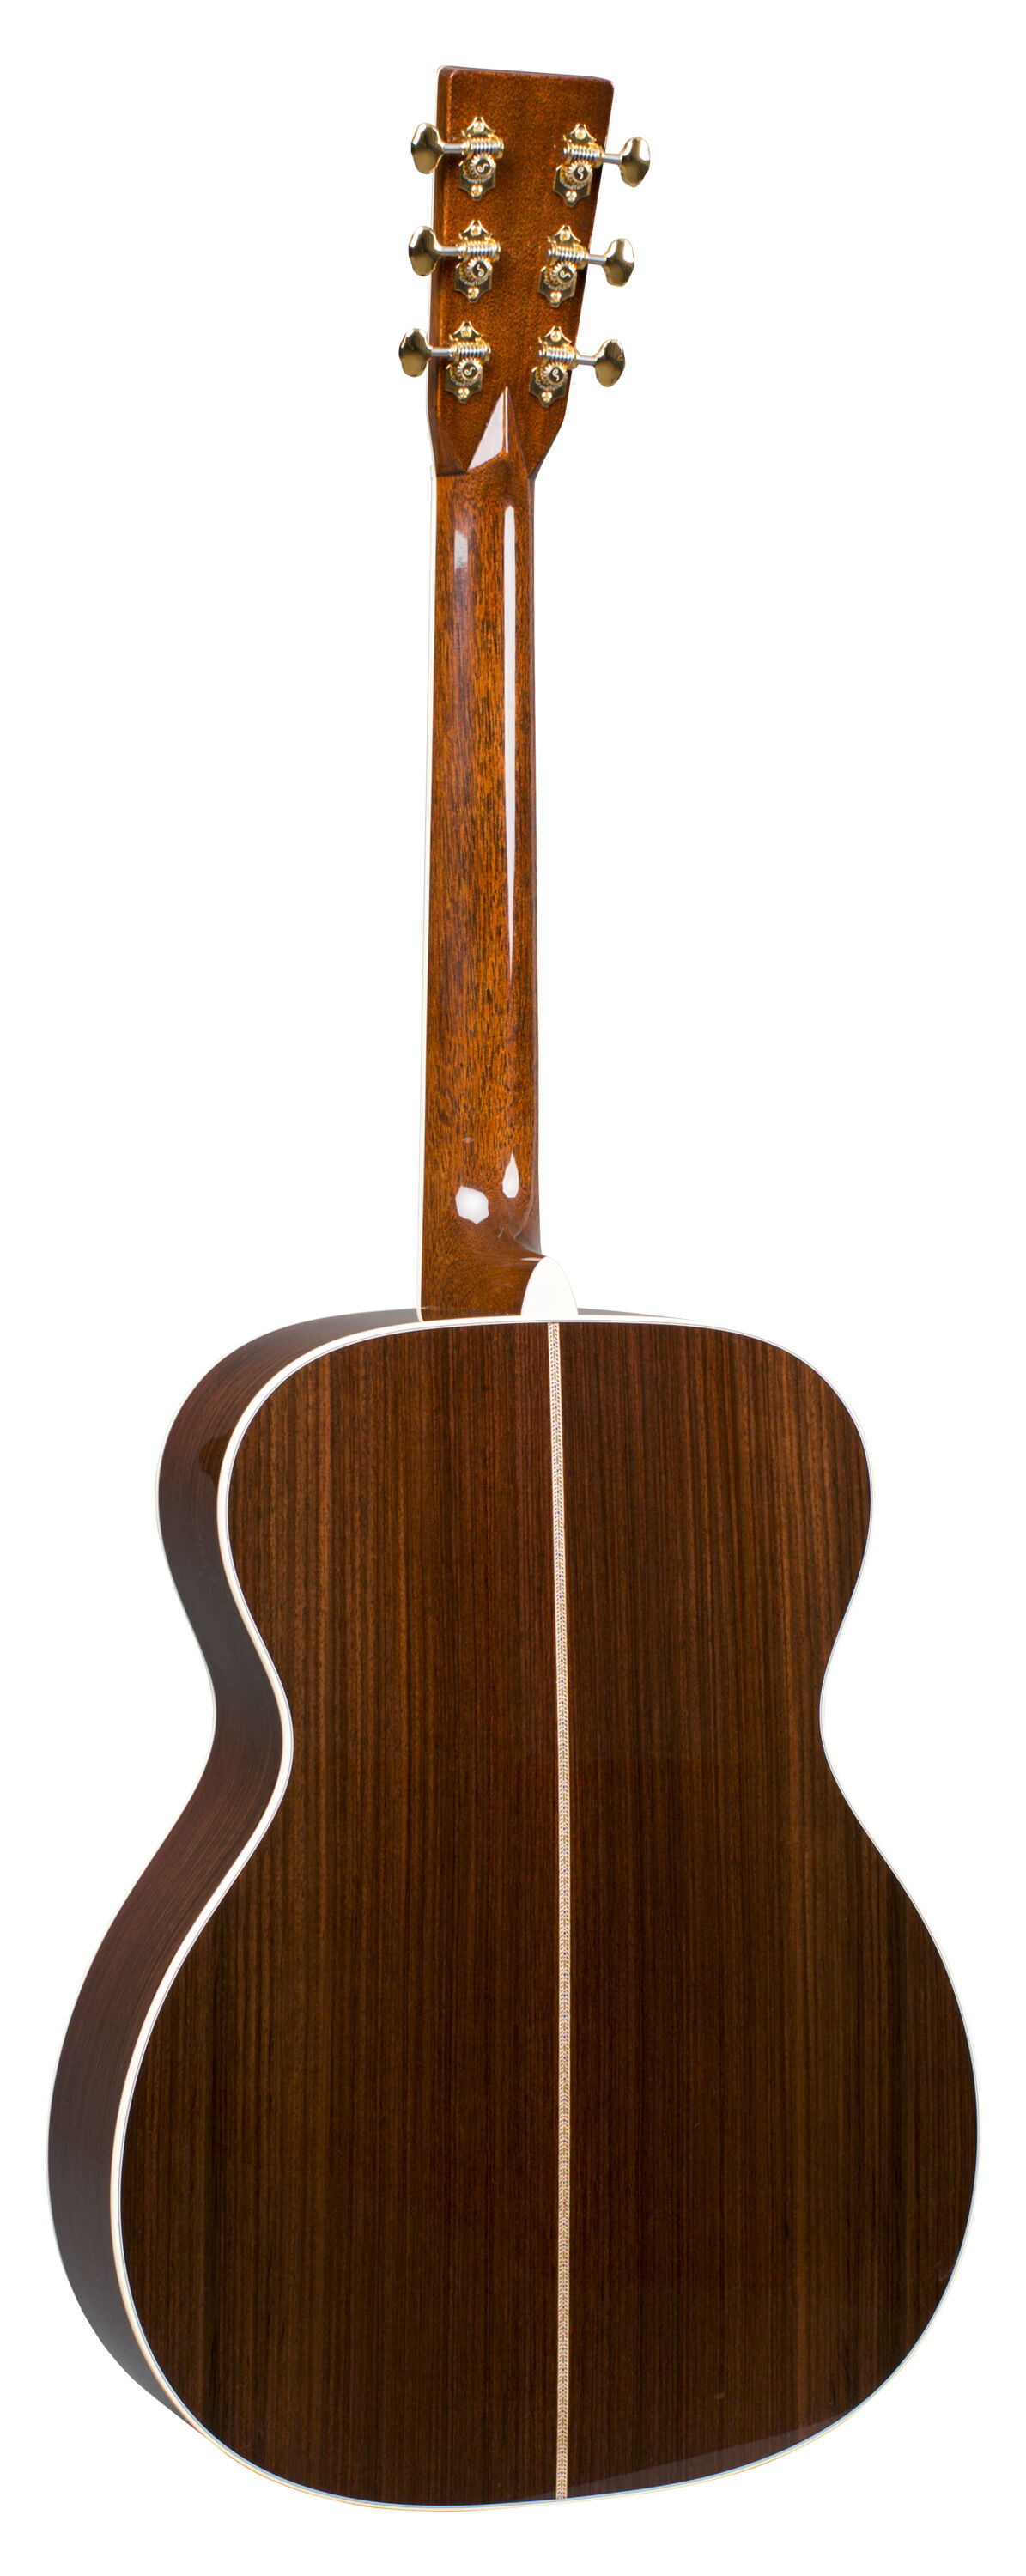 Martin 000-42 Acoustic Guitar | Martin Guitar